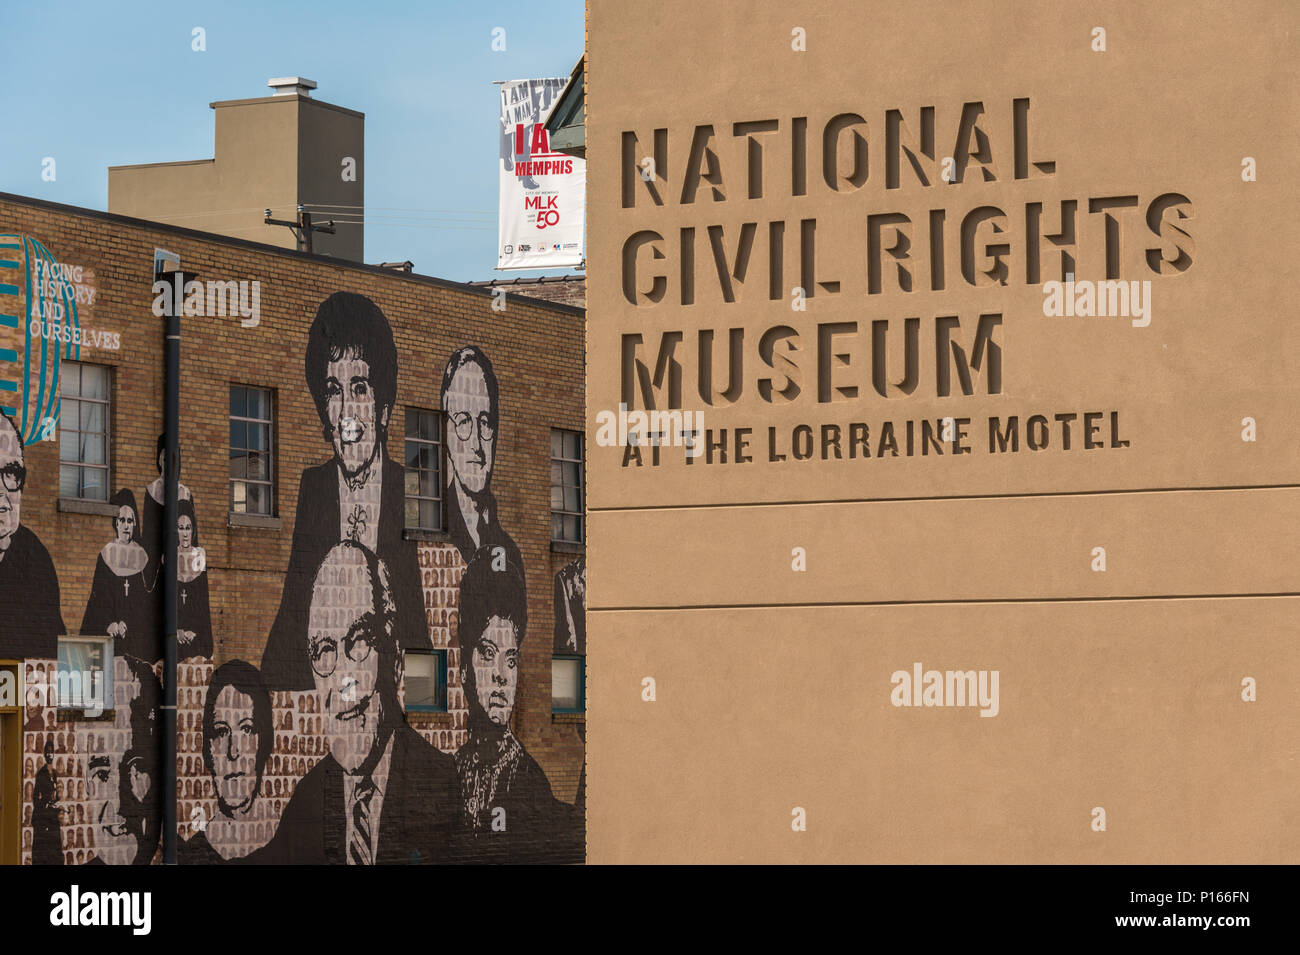 National Civil Rights Museum Lorraine Motel, Ort der Ermordung von Martin Luther King in 1968 in Memphis, TN. Stockfoto